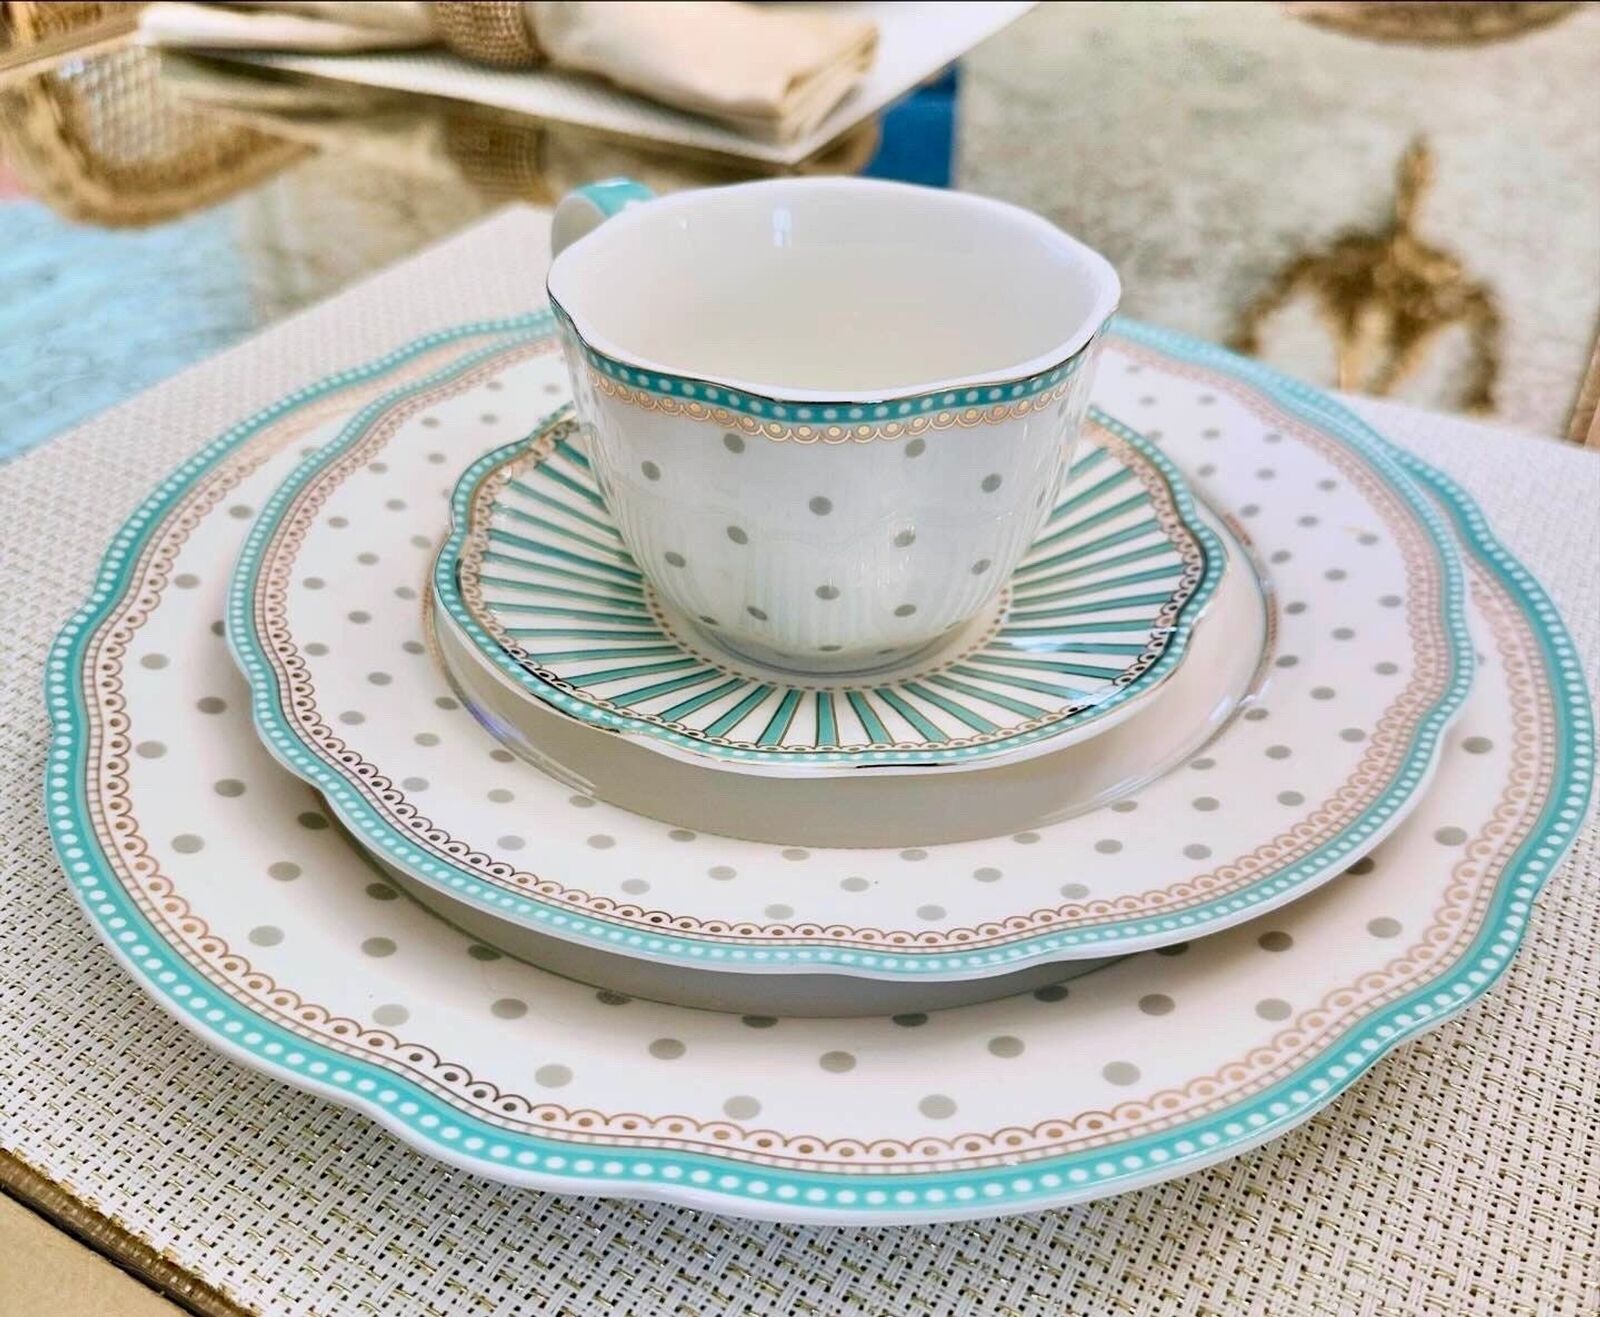 Grace’s Serveware Tiffanys - Porcelain Scalloped Plates and Teacup Set